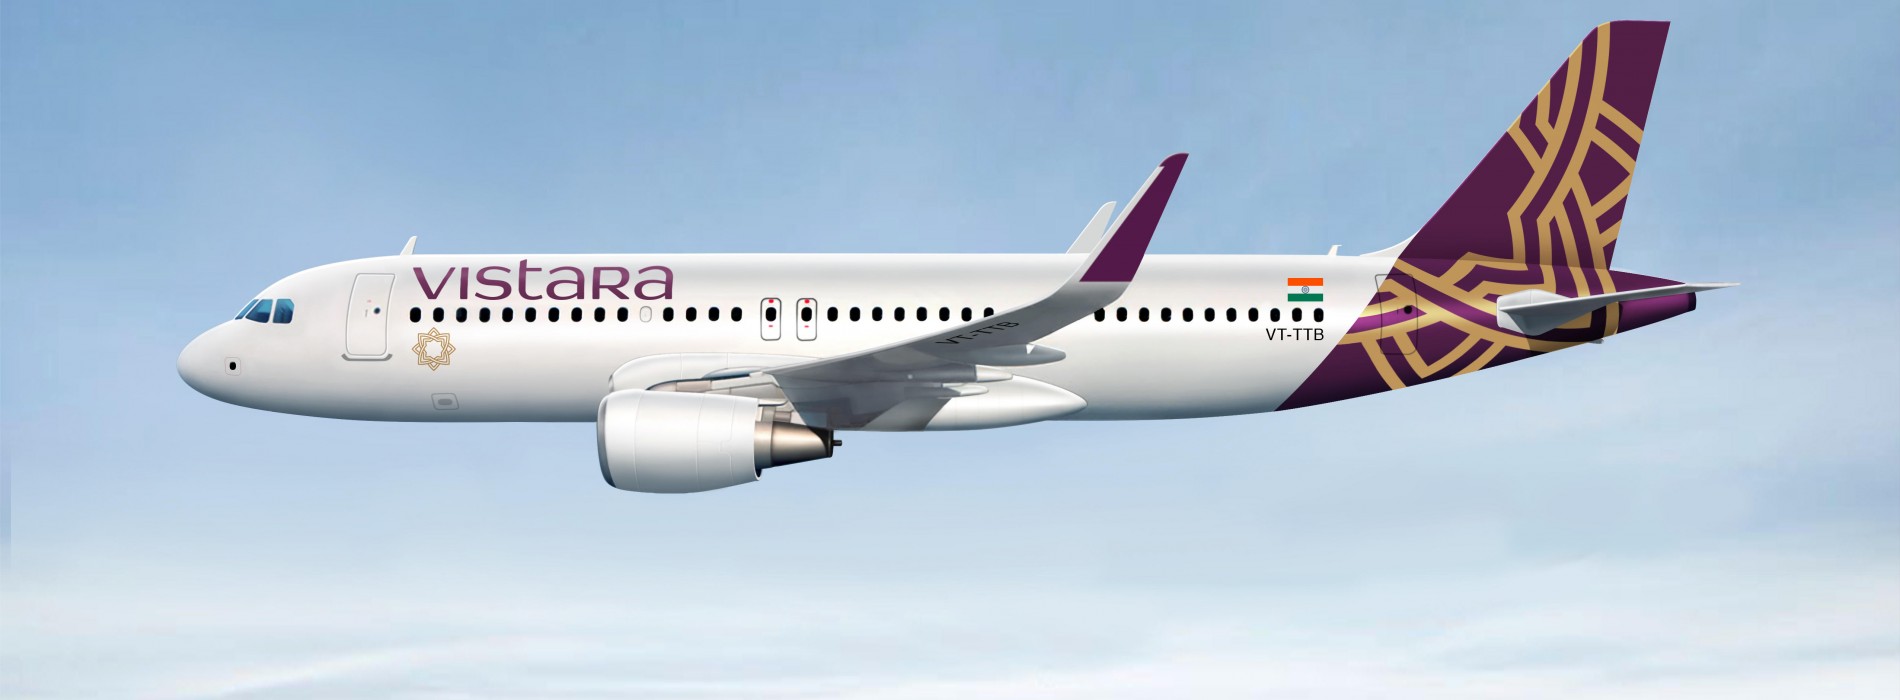 Vistara to launch first island flights